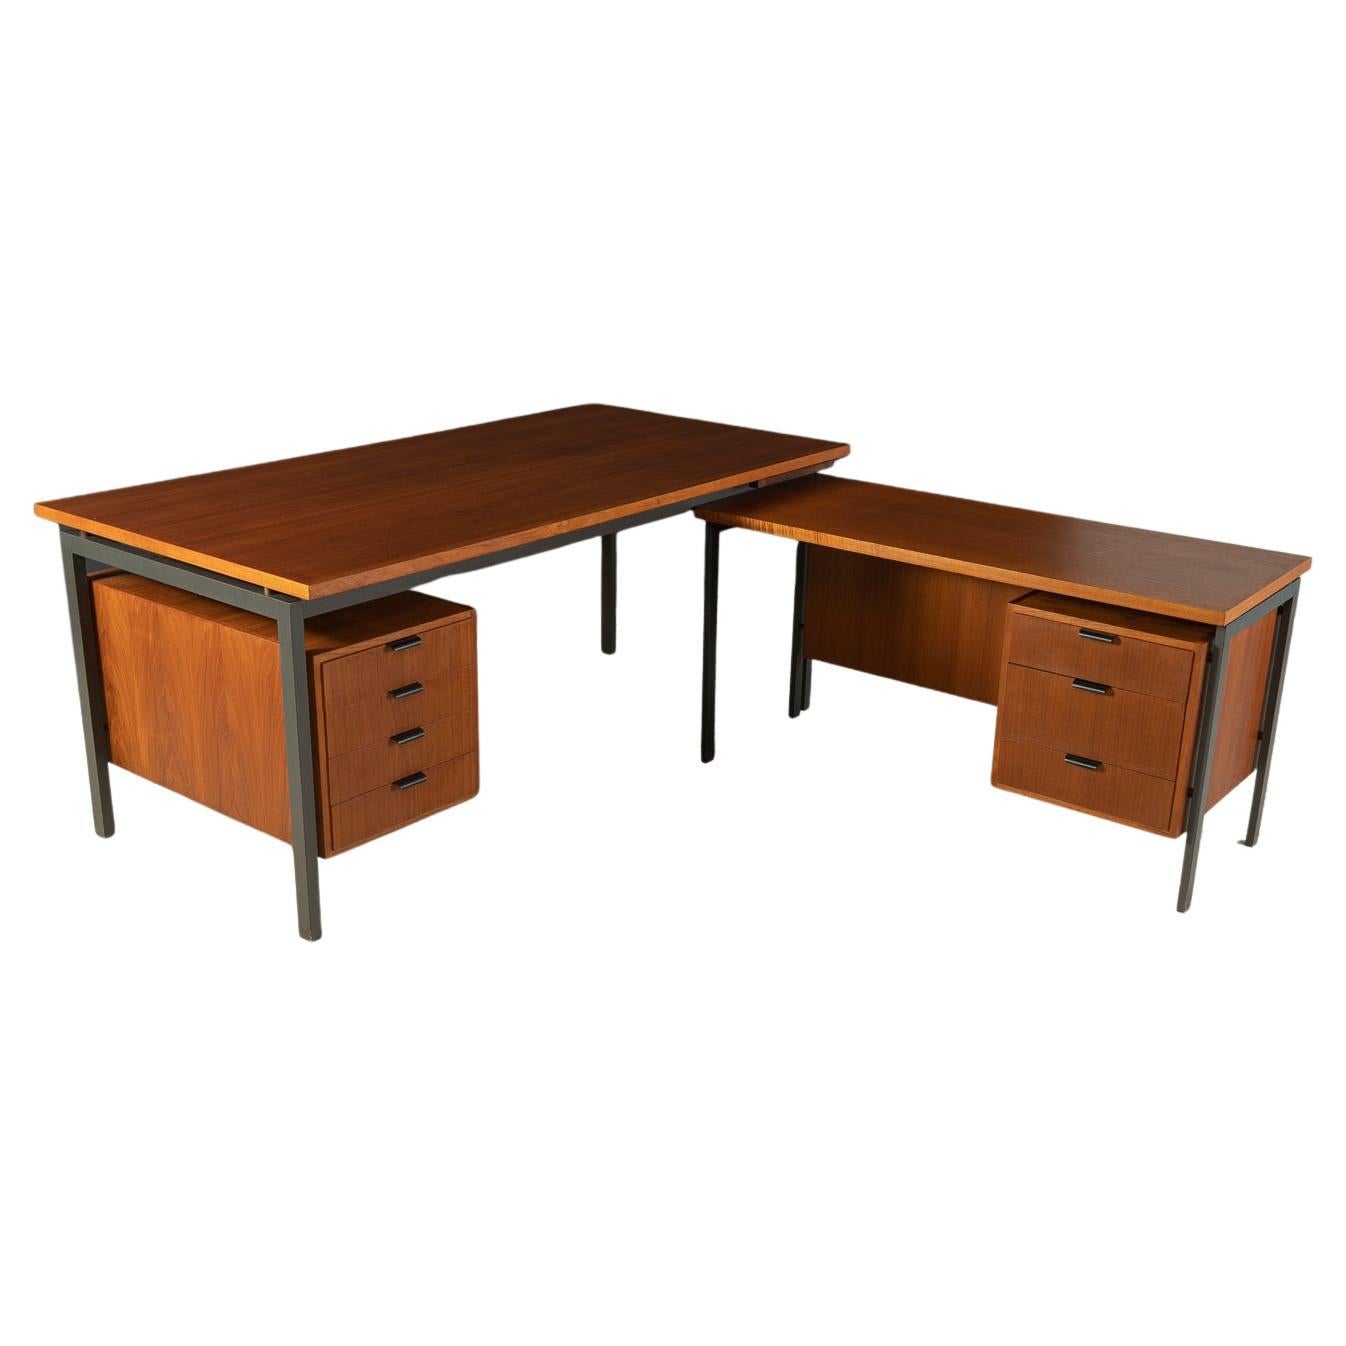 Set of Desks by Herbert Hirche for Holzäpfel 1950s